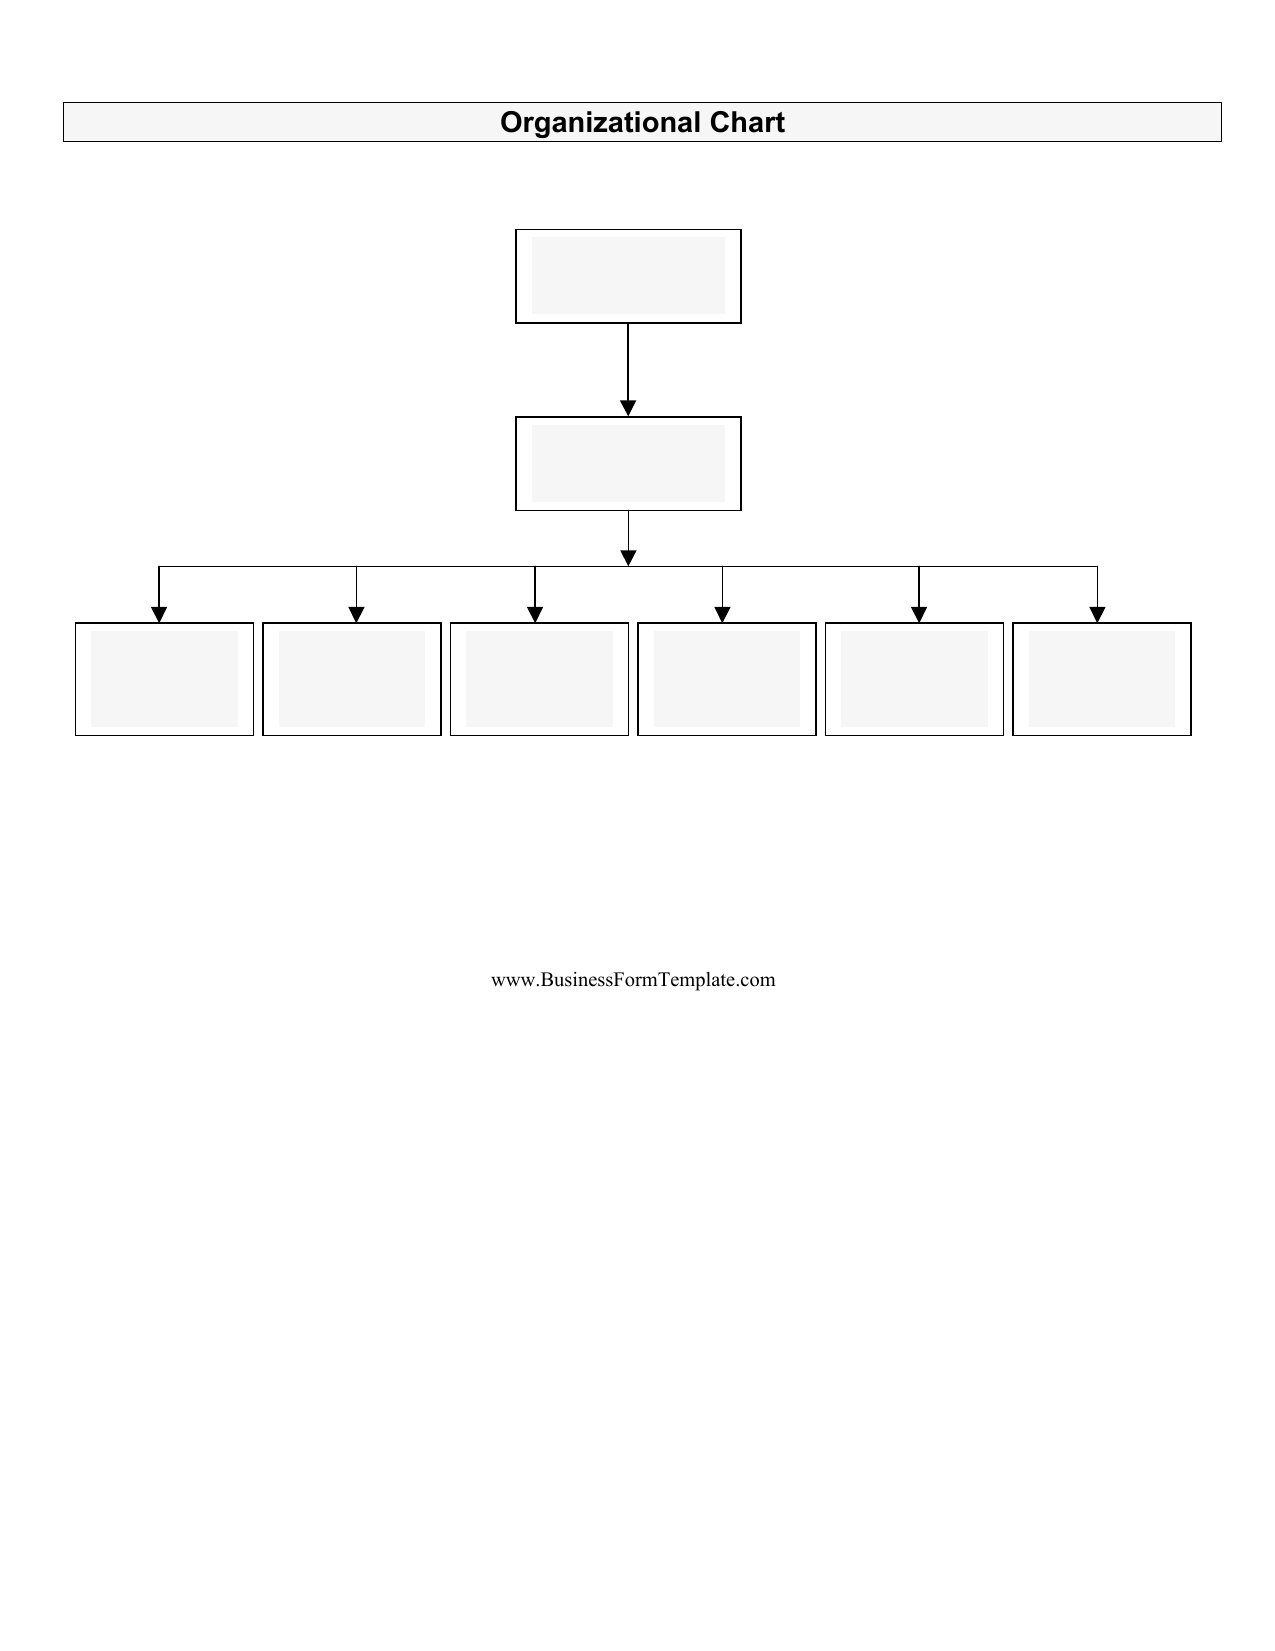 blank organization chart template